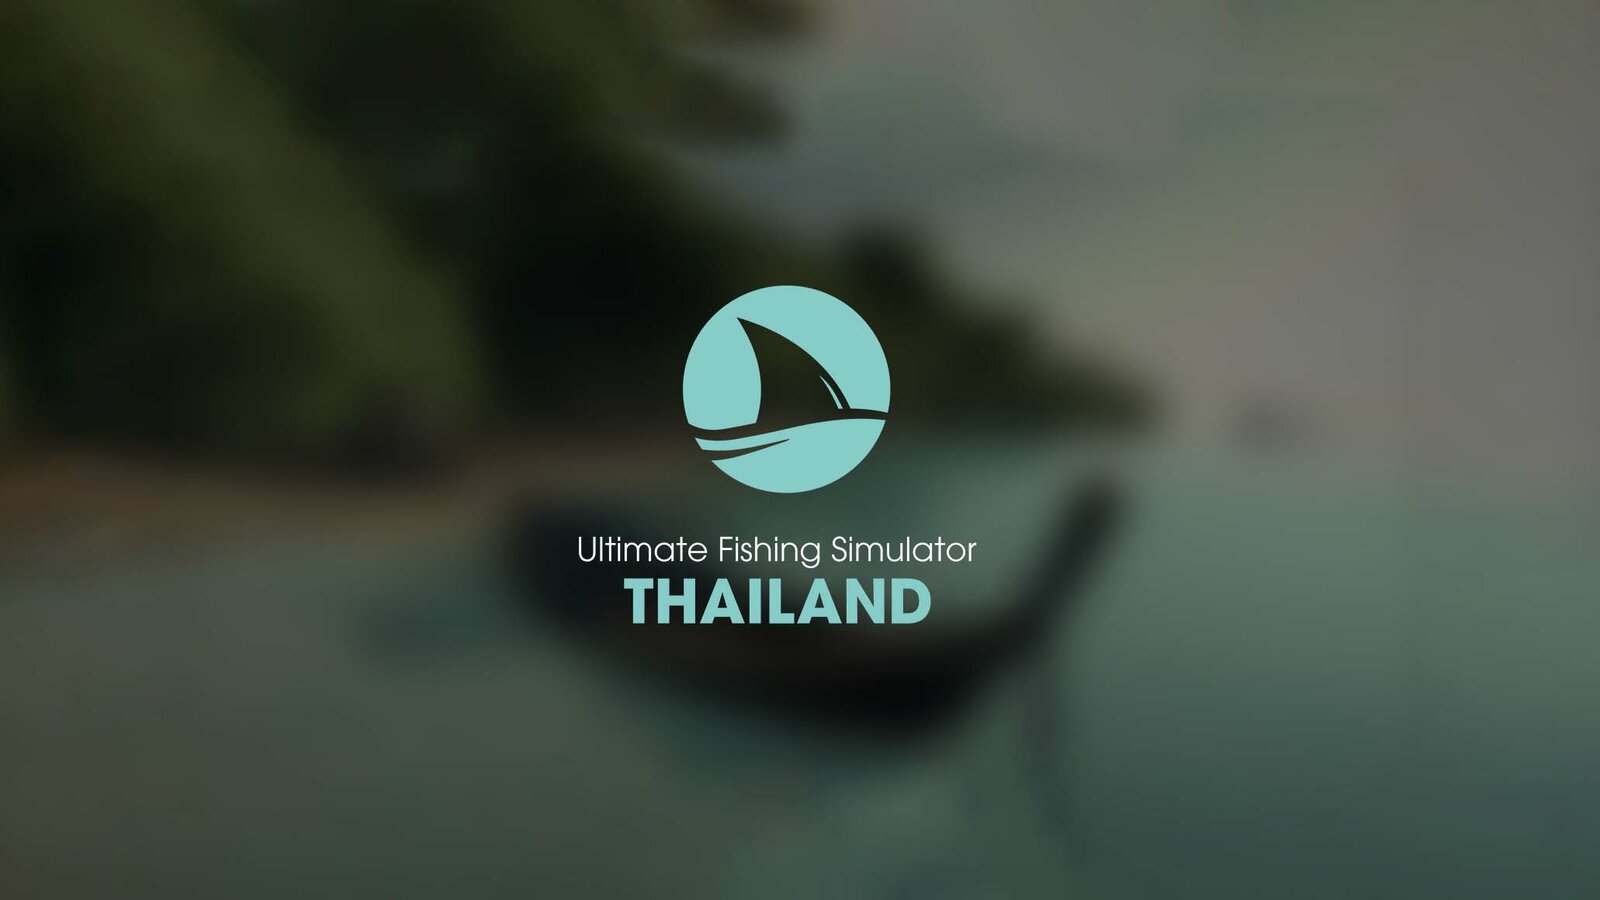 Ultimate Fishing Simulator - Thailand